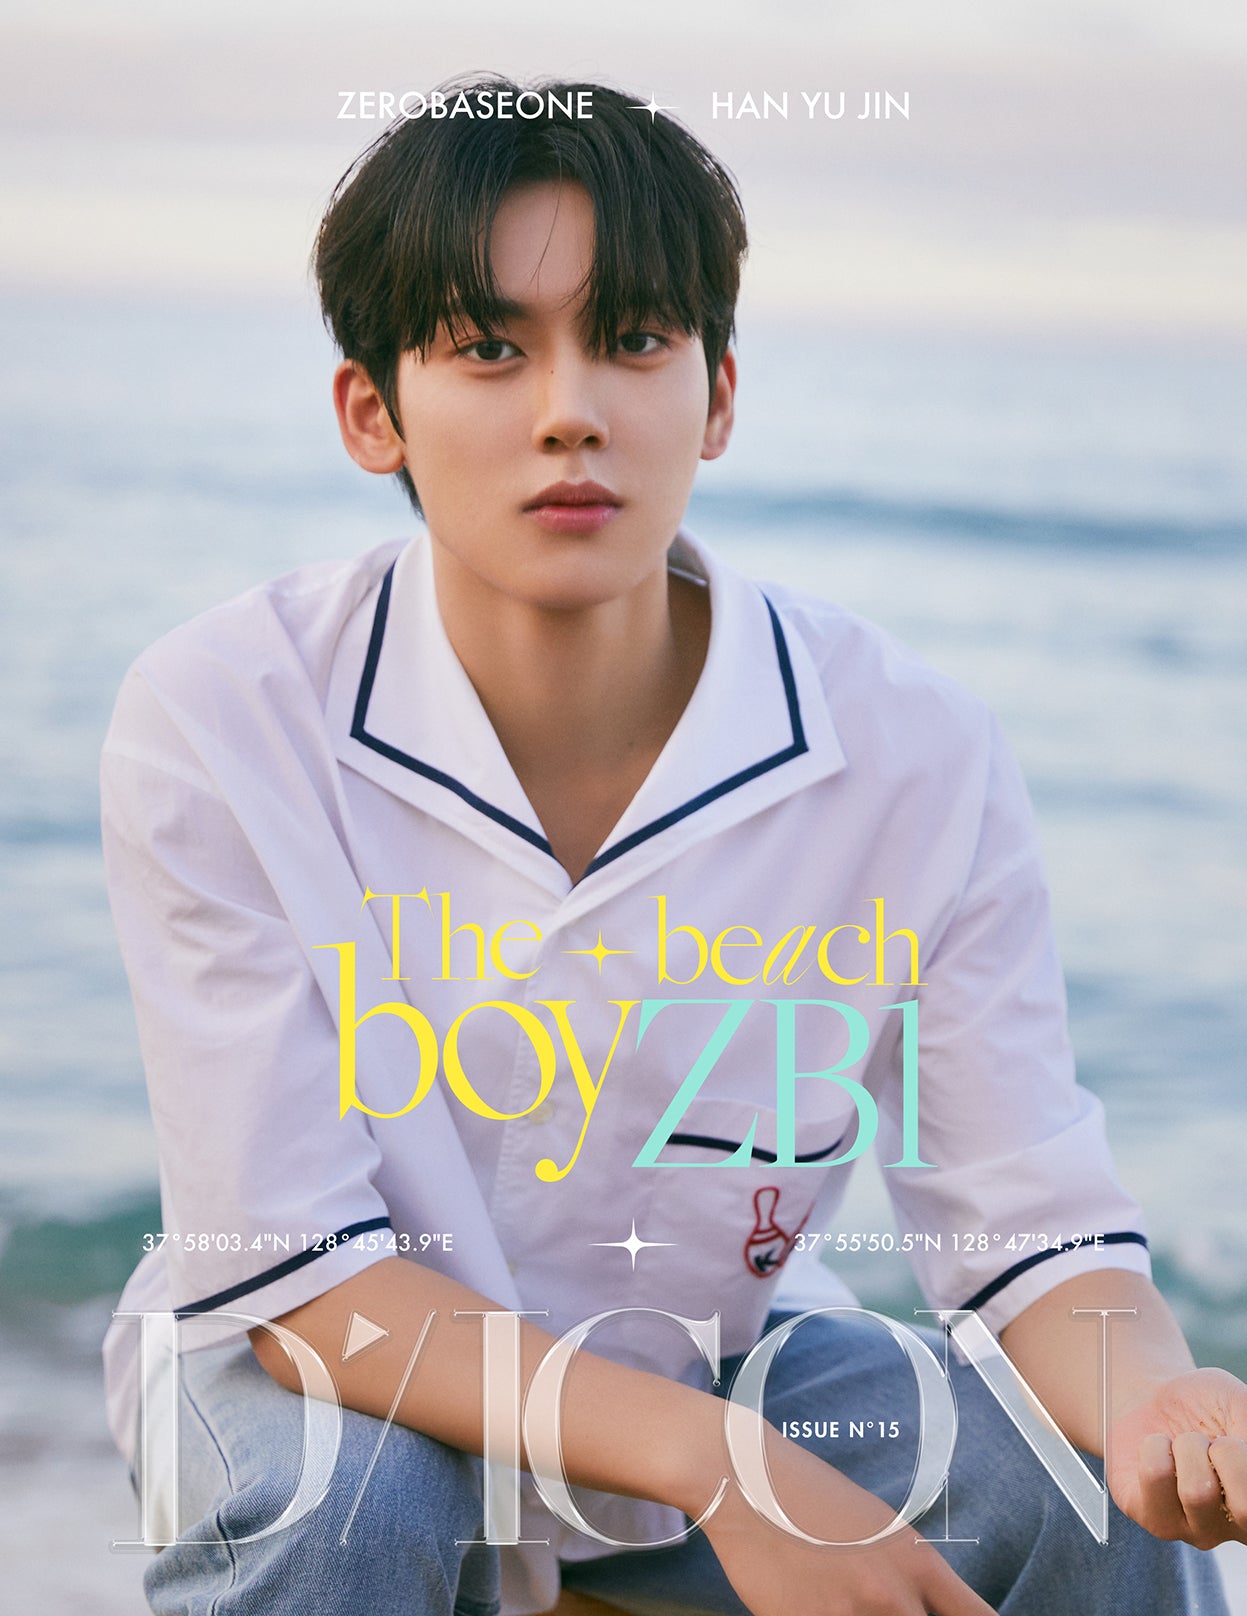 DICON VOLUME N°15 ZEROBASEONE : The beach boyZB1 HAN YU JIN Cover